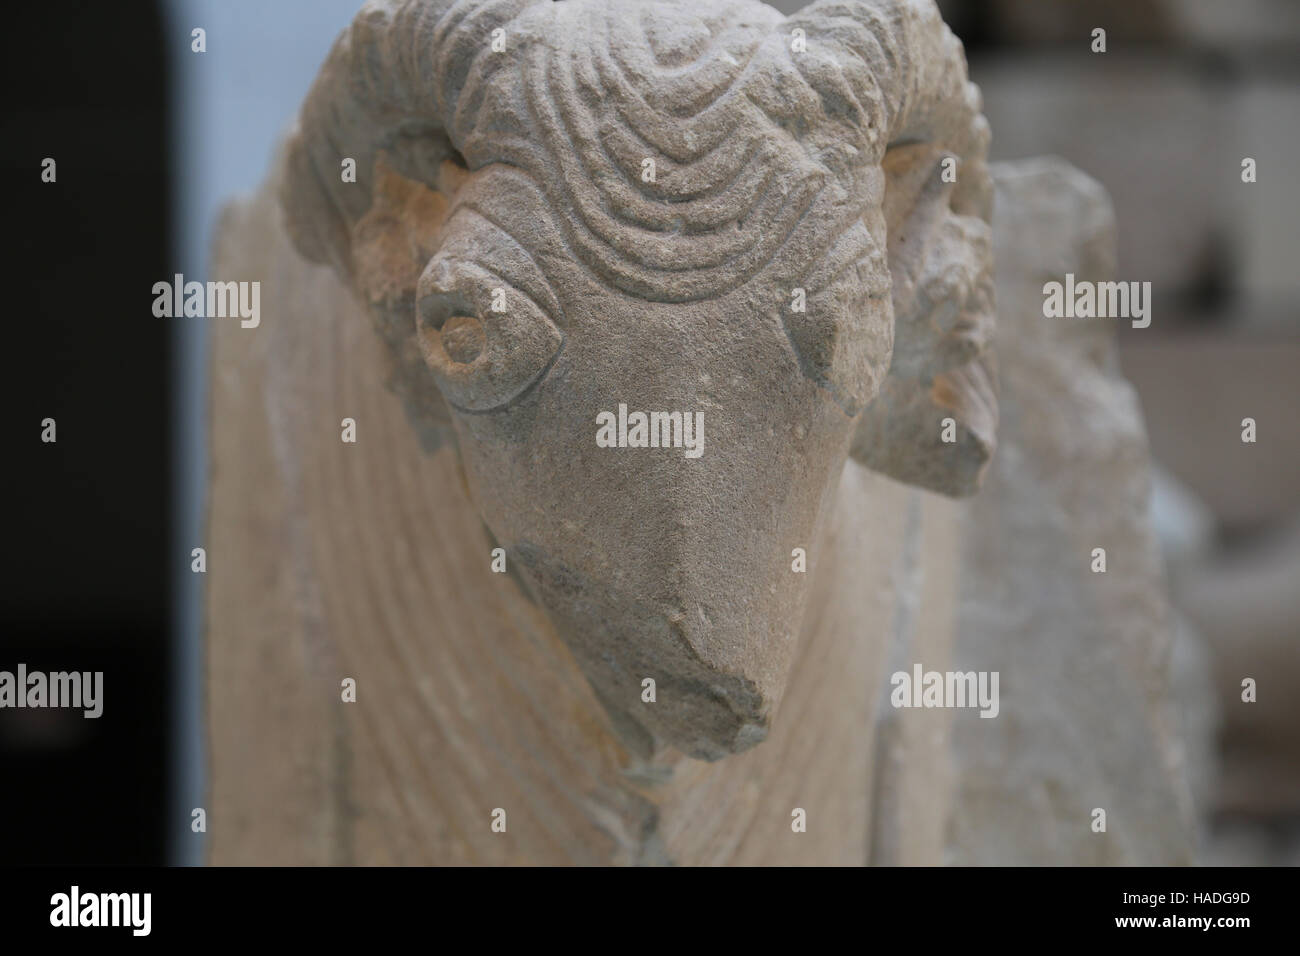 Ram protome. Limestone. Iberian culture. 2nd-1st century BC. Osuna. Spain. National Archaeological Museum, Madrid. Spain. Stock Photo